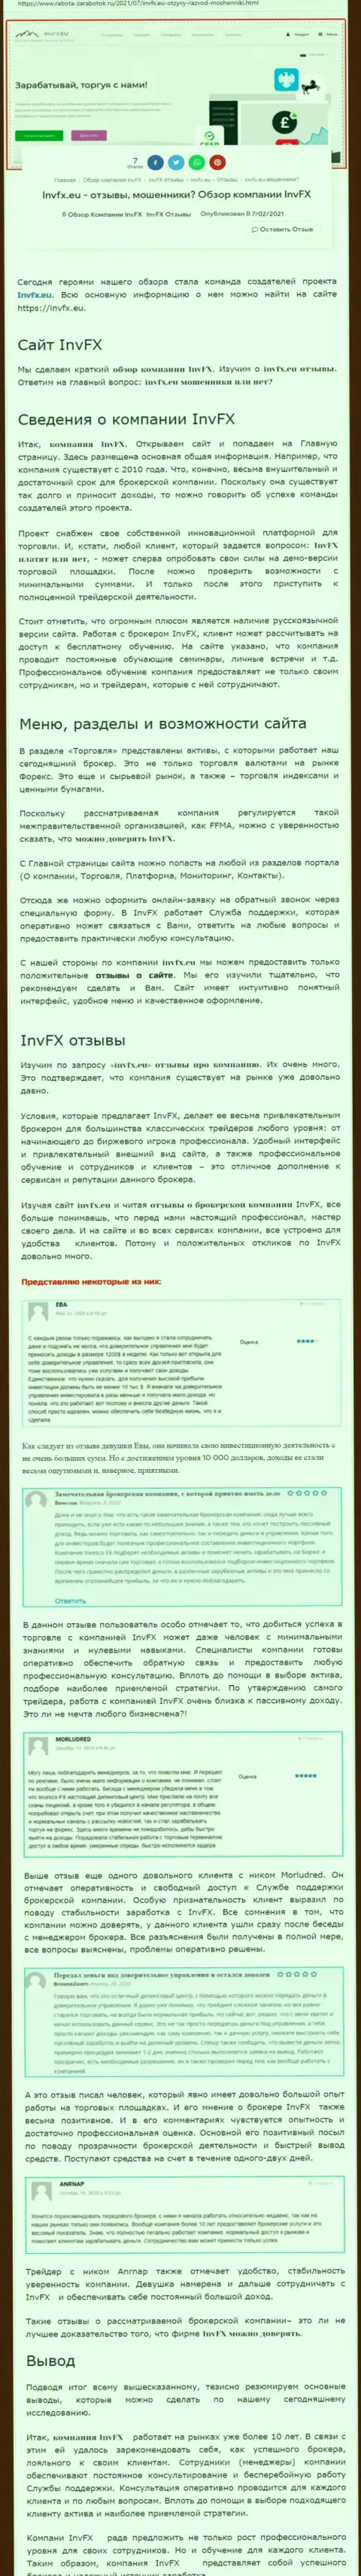 Материал сайта Rabota Zarabotok Ru о Форекс дилере ИНВФХ